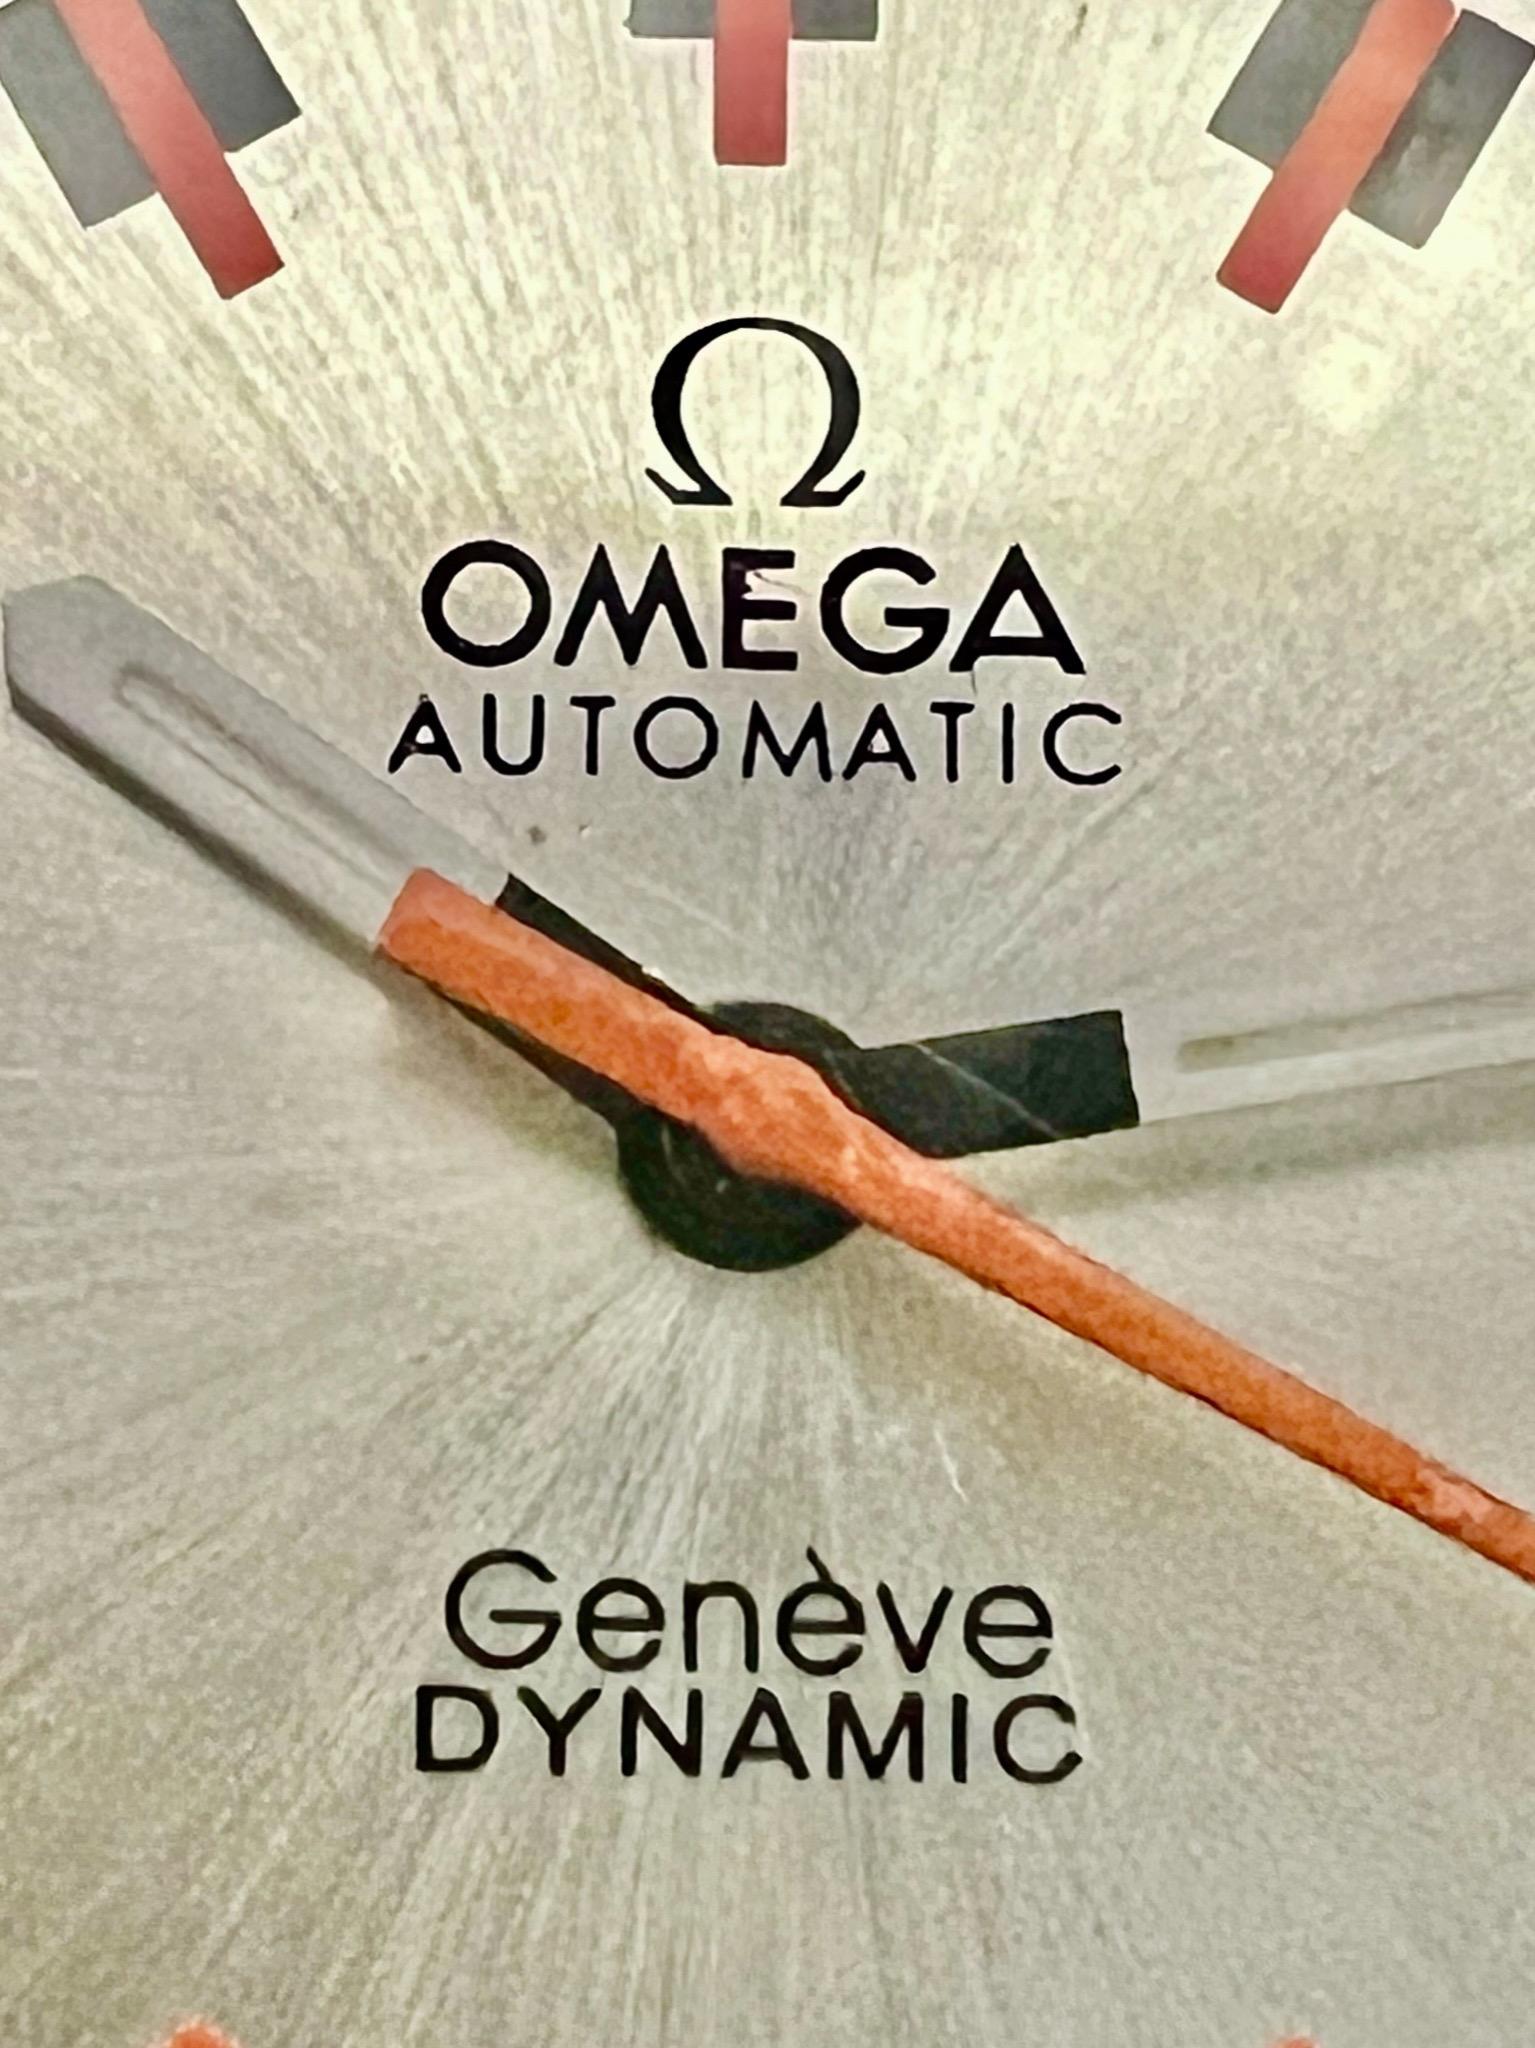 omega automatic geneve dynamic